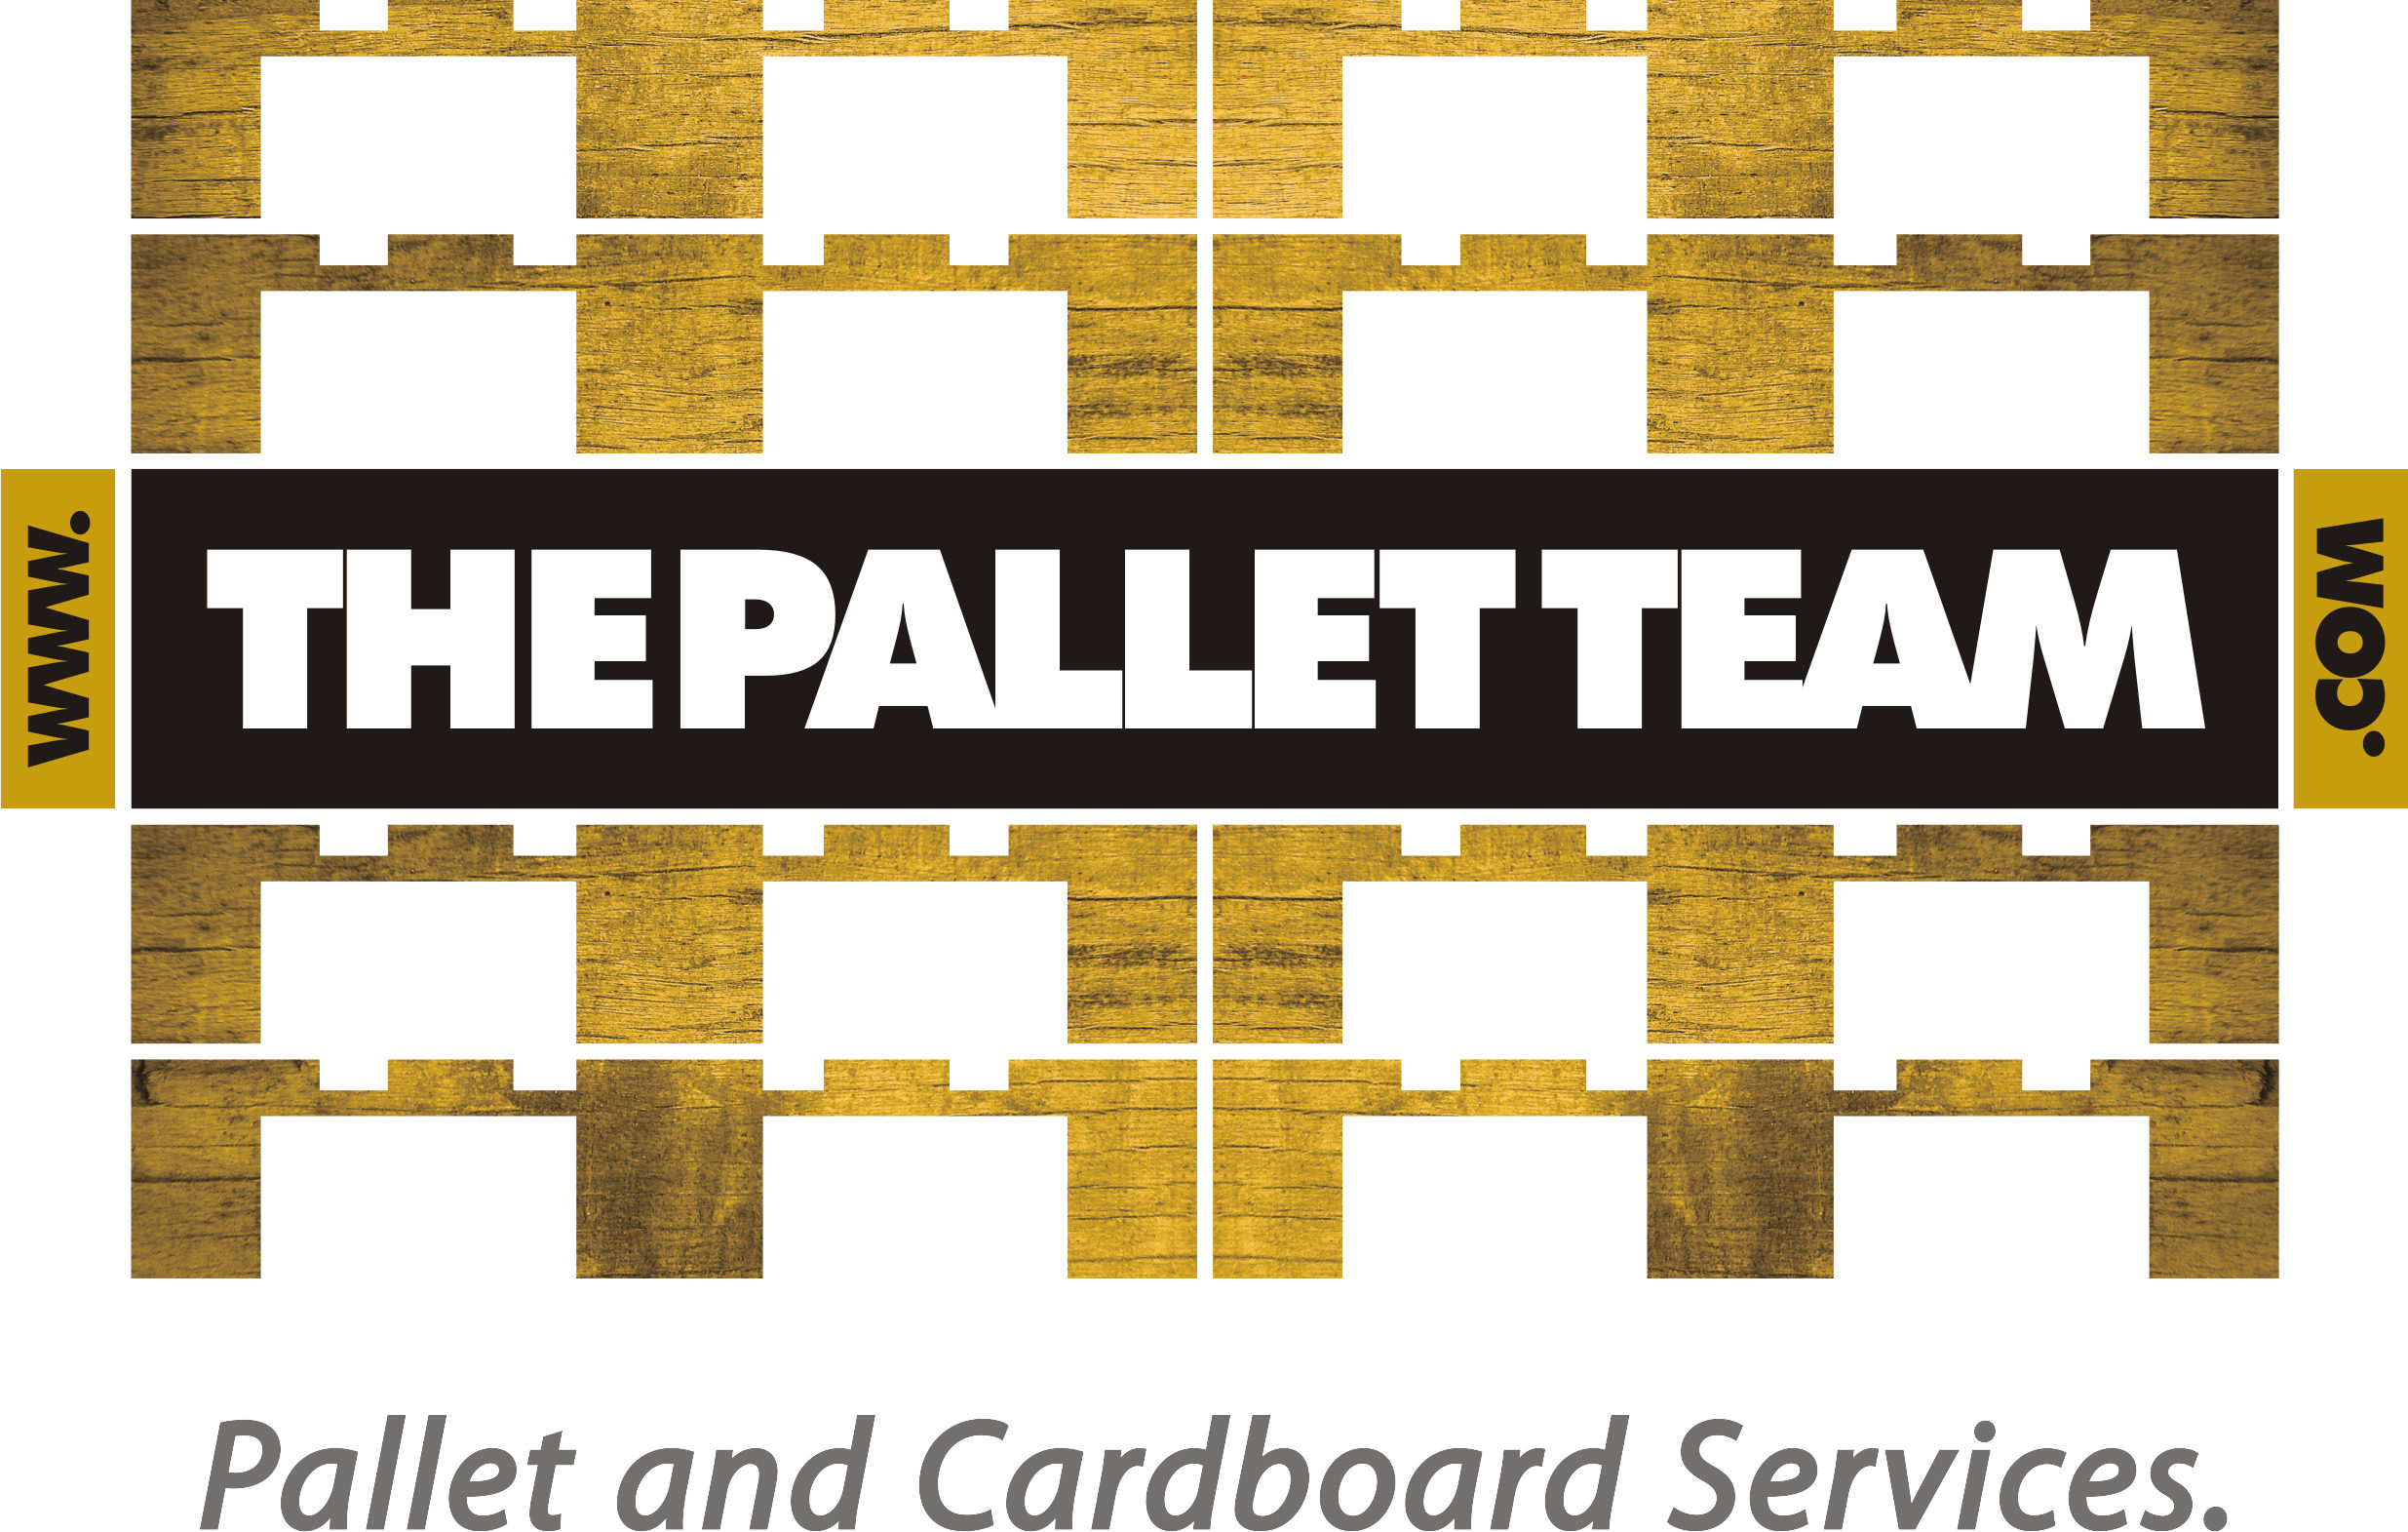 The Pallet Team